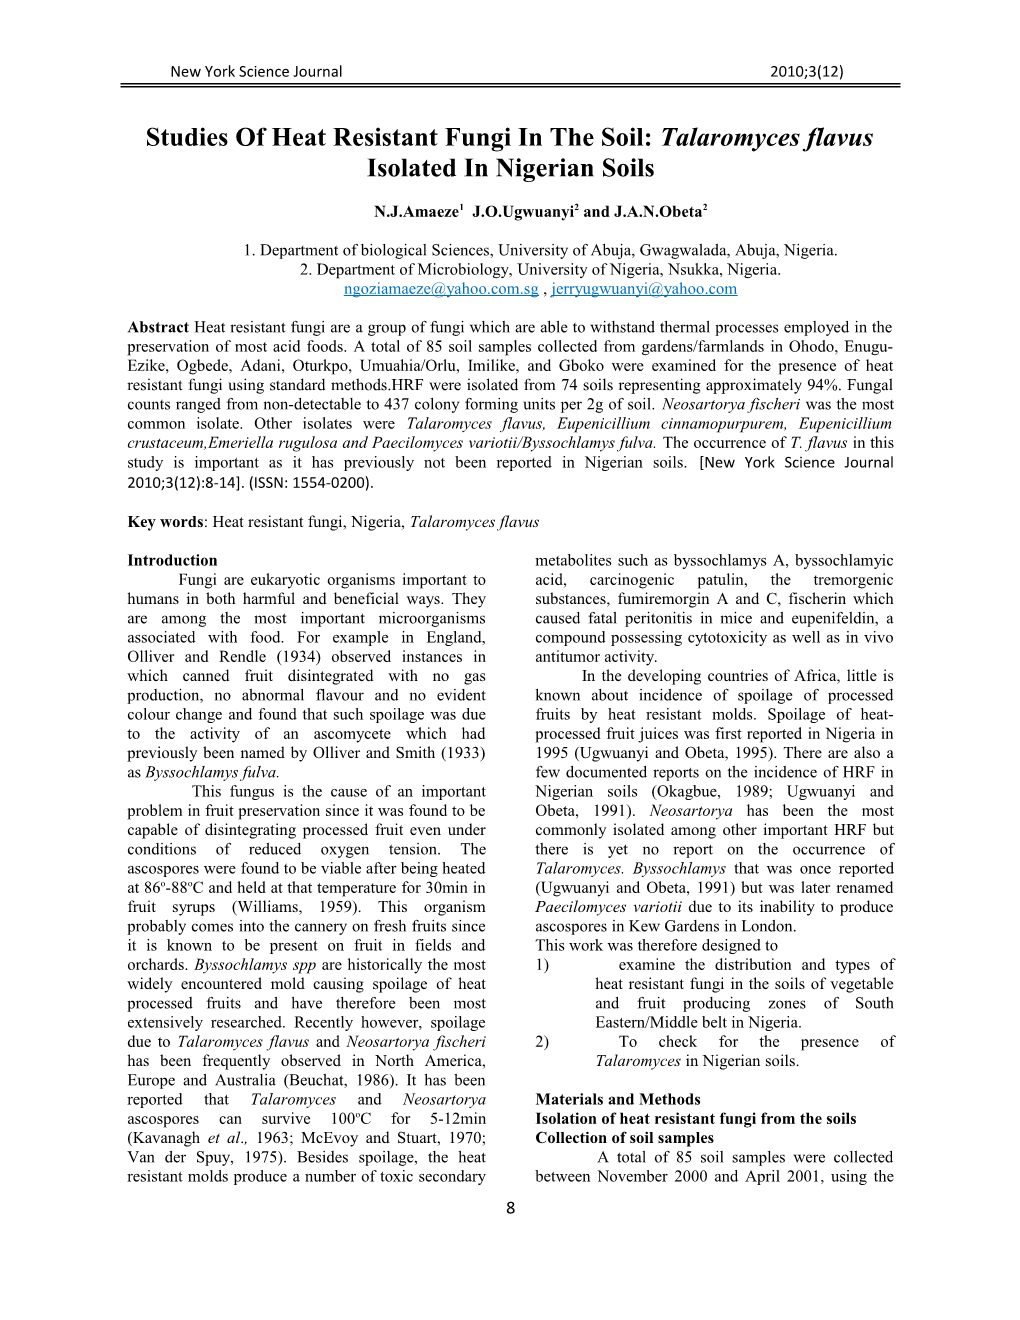 Studies of Heat Resistant Fungi in the Soil:Talaromyces Flavus Isolated in Nigerian Soils